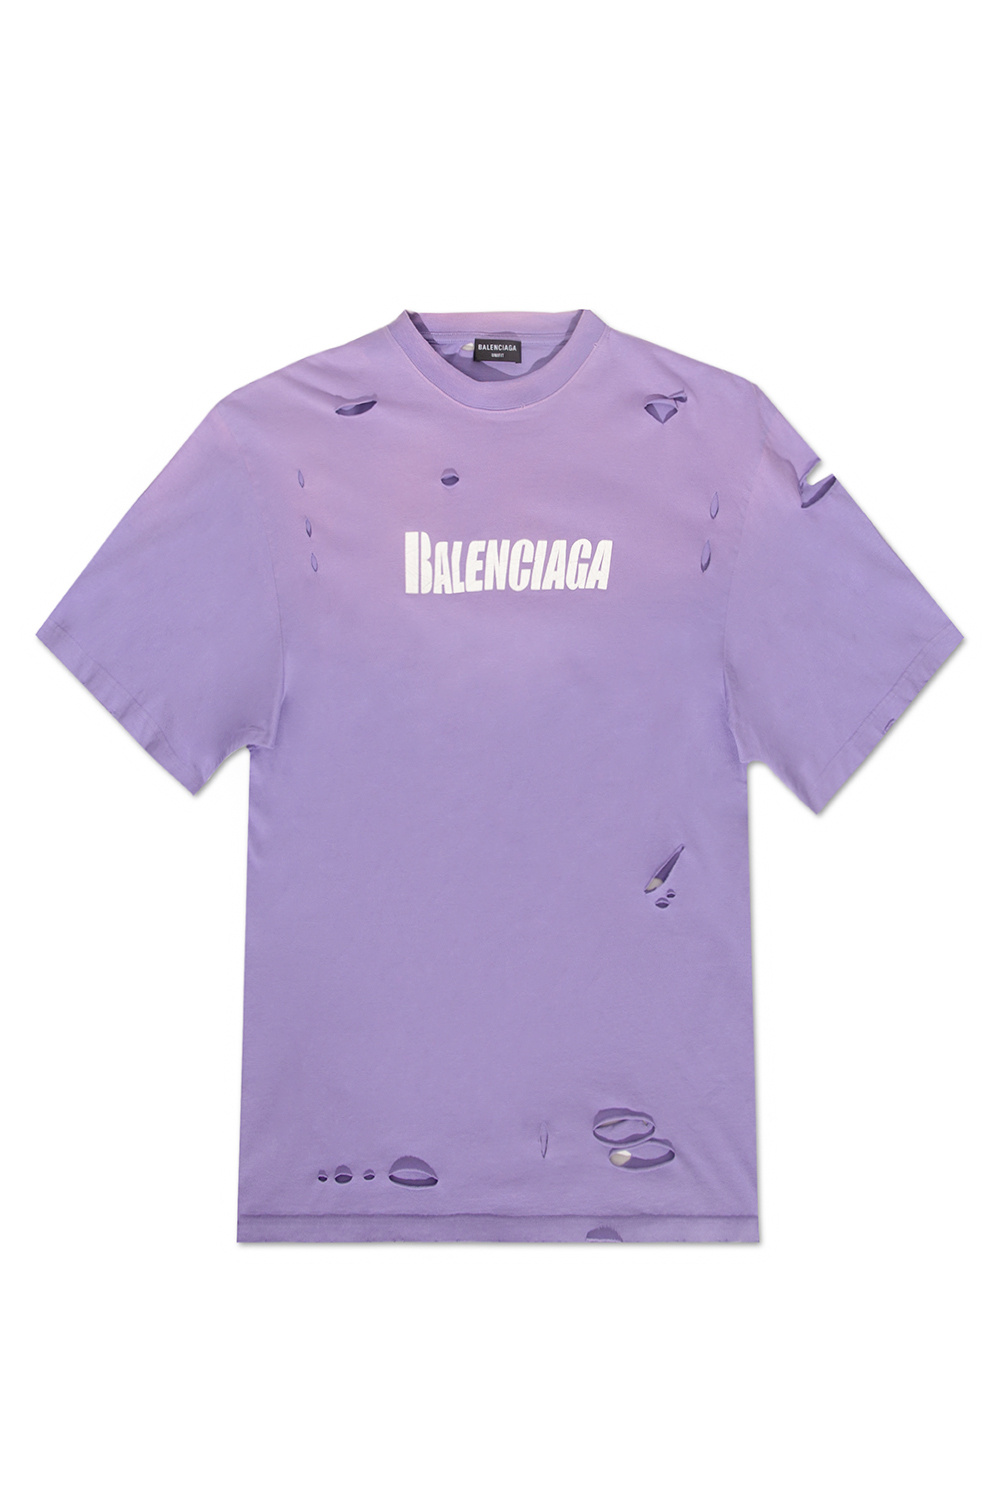 Balenciaga T-shirt with faded effect | Men's Clothing | Vitkac